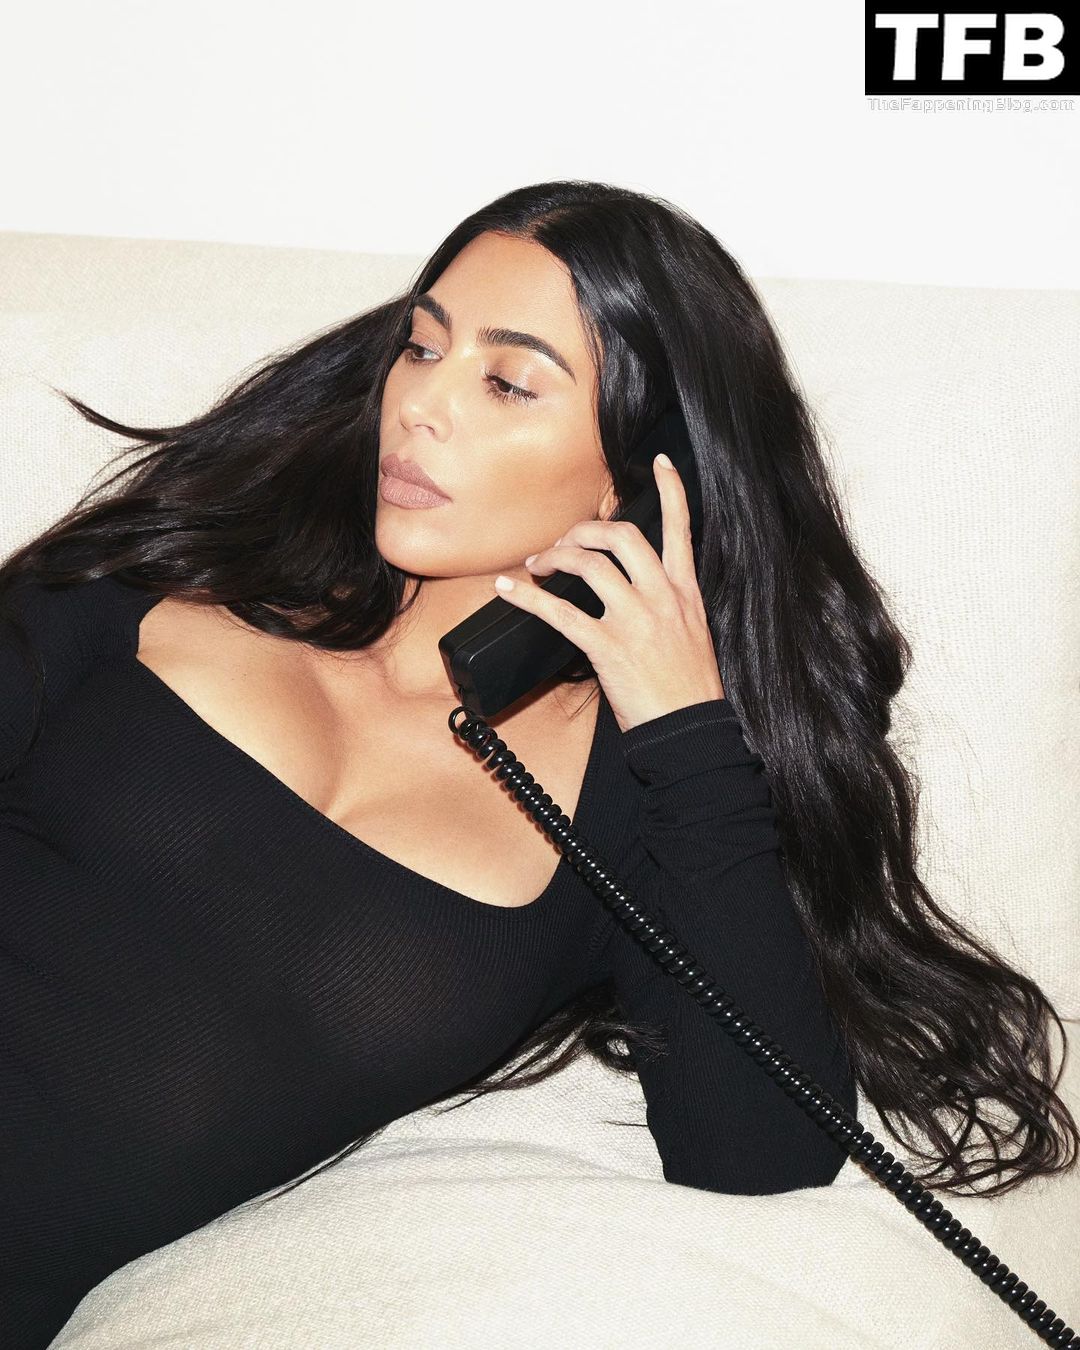 Kim-Kardashian-Tits-The-Fappening-Blog-2.jpg